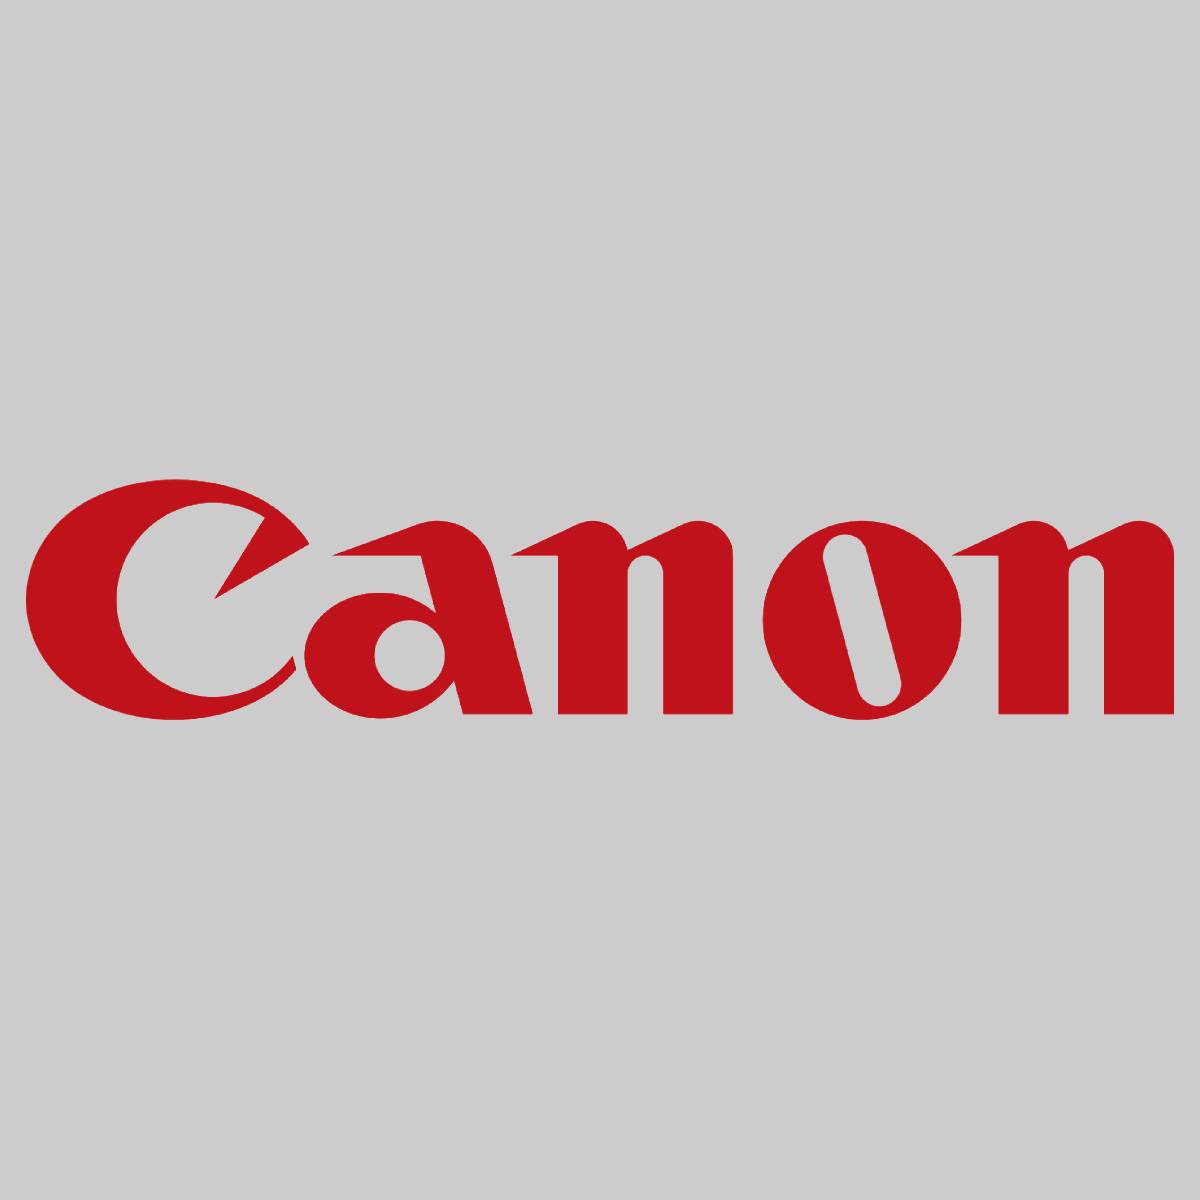 "Originální Canon Drum Developing Drive Assy FM4-9326-010 für iR Adv C5235-C5250